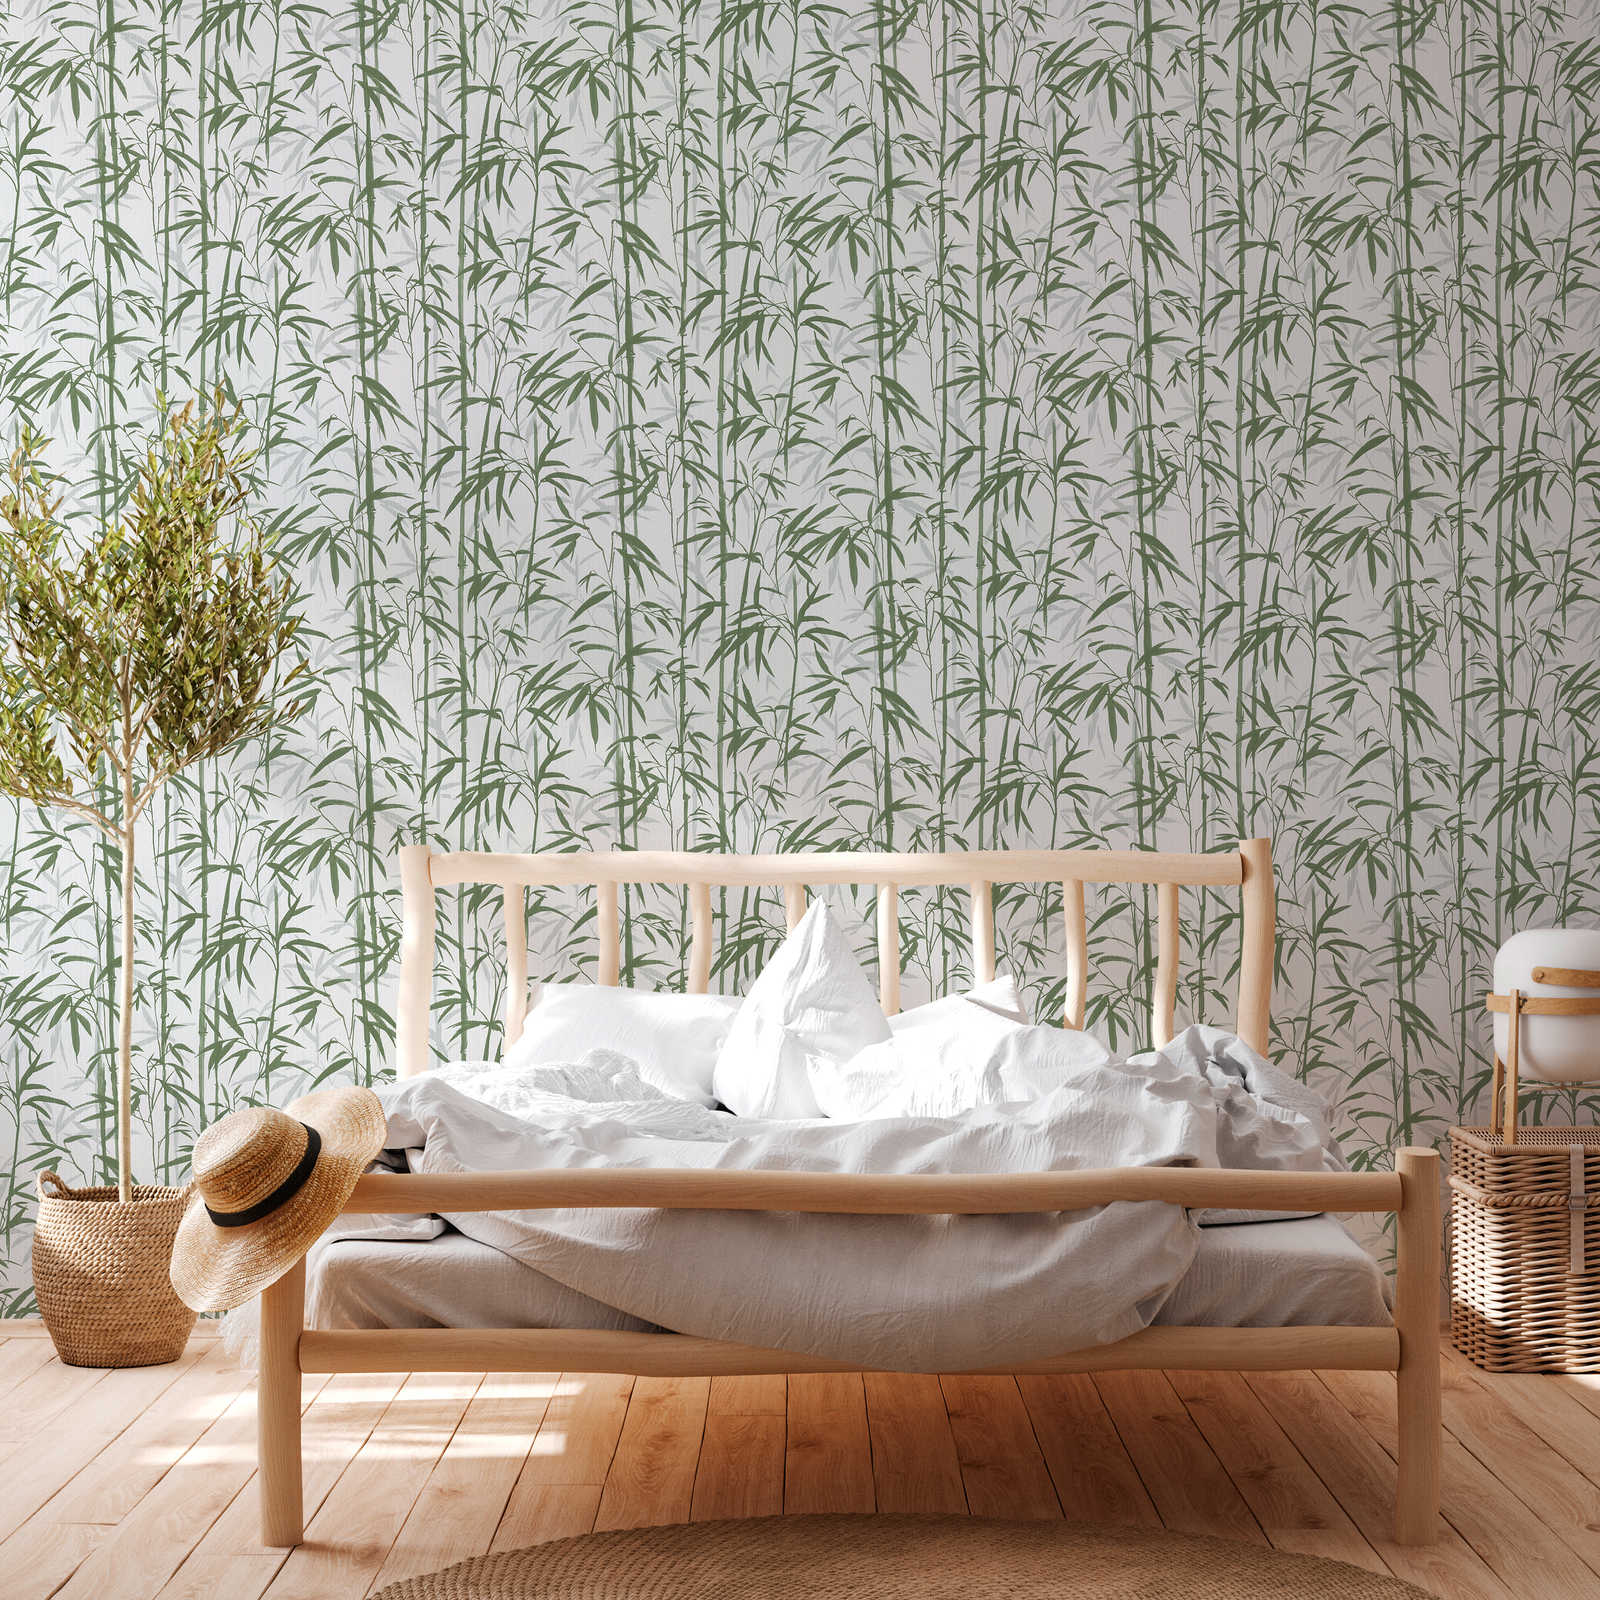             MICHALSKY non-woven wallpaper natural bamboo pattern - cream, green
        